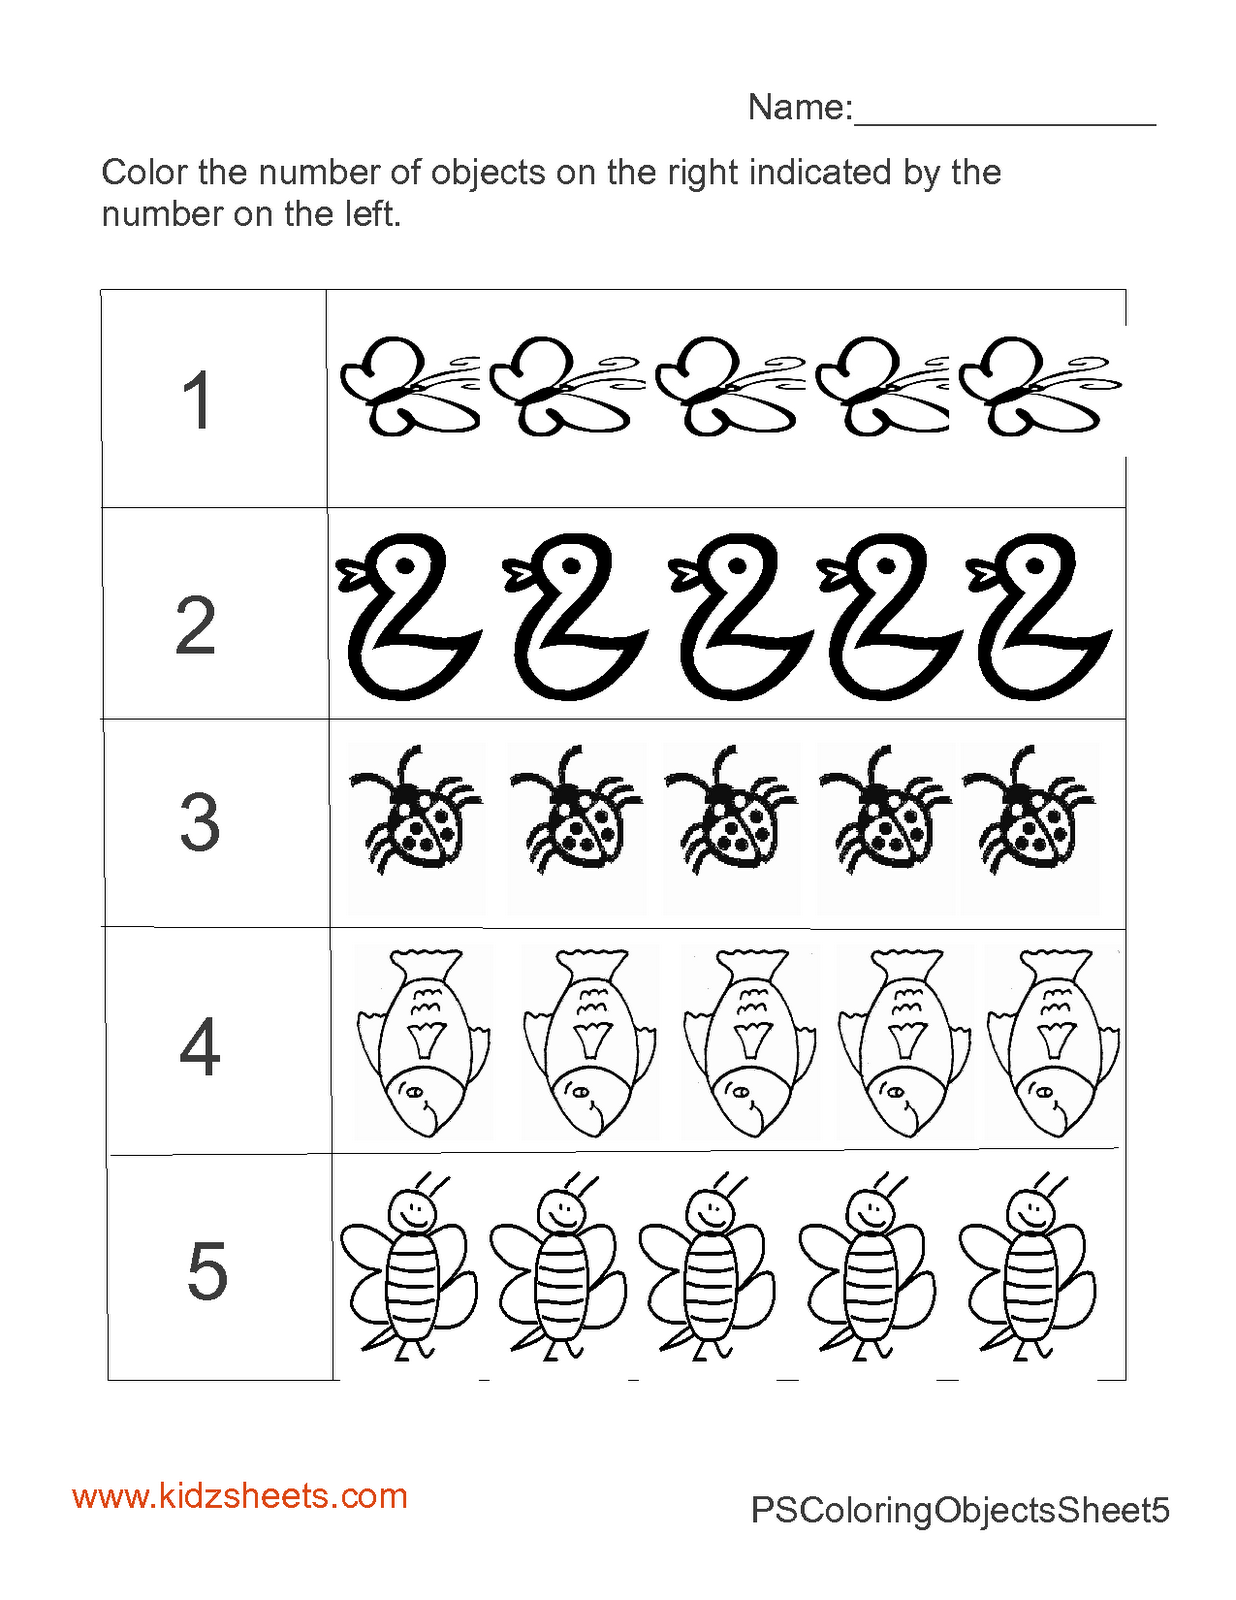 Preschool Counting Worksheets Image